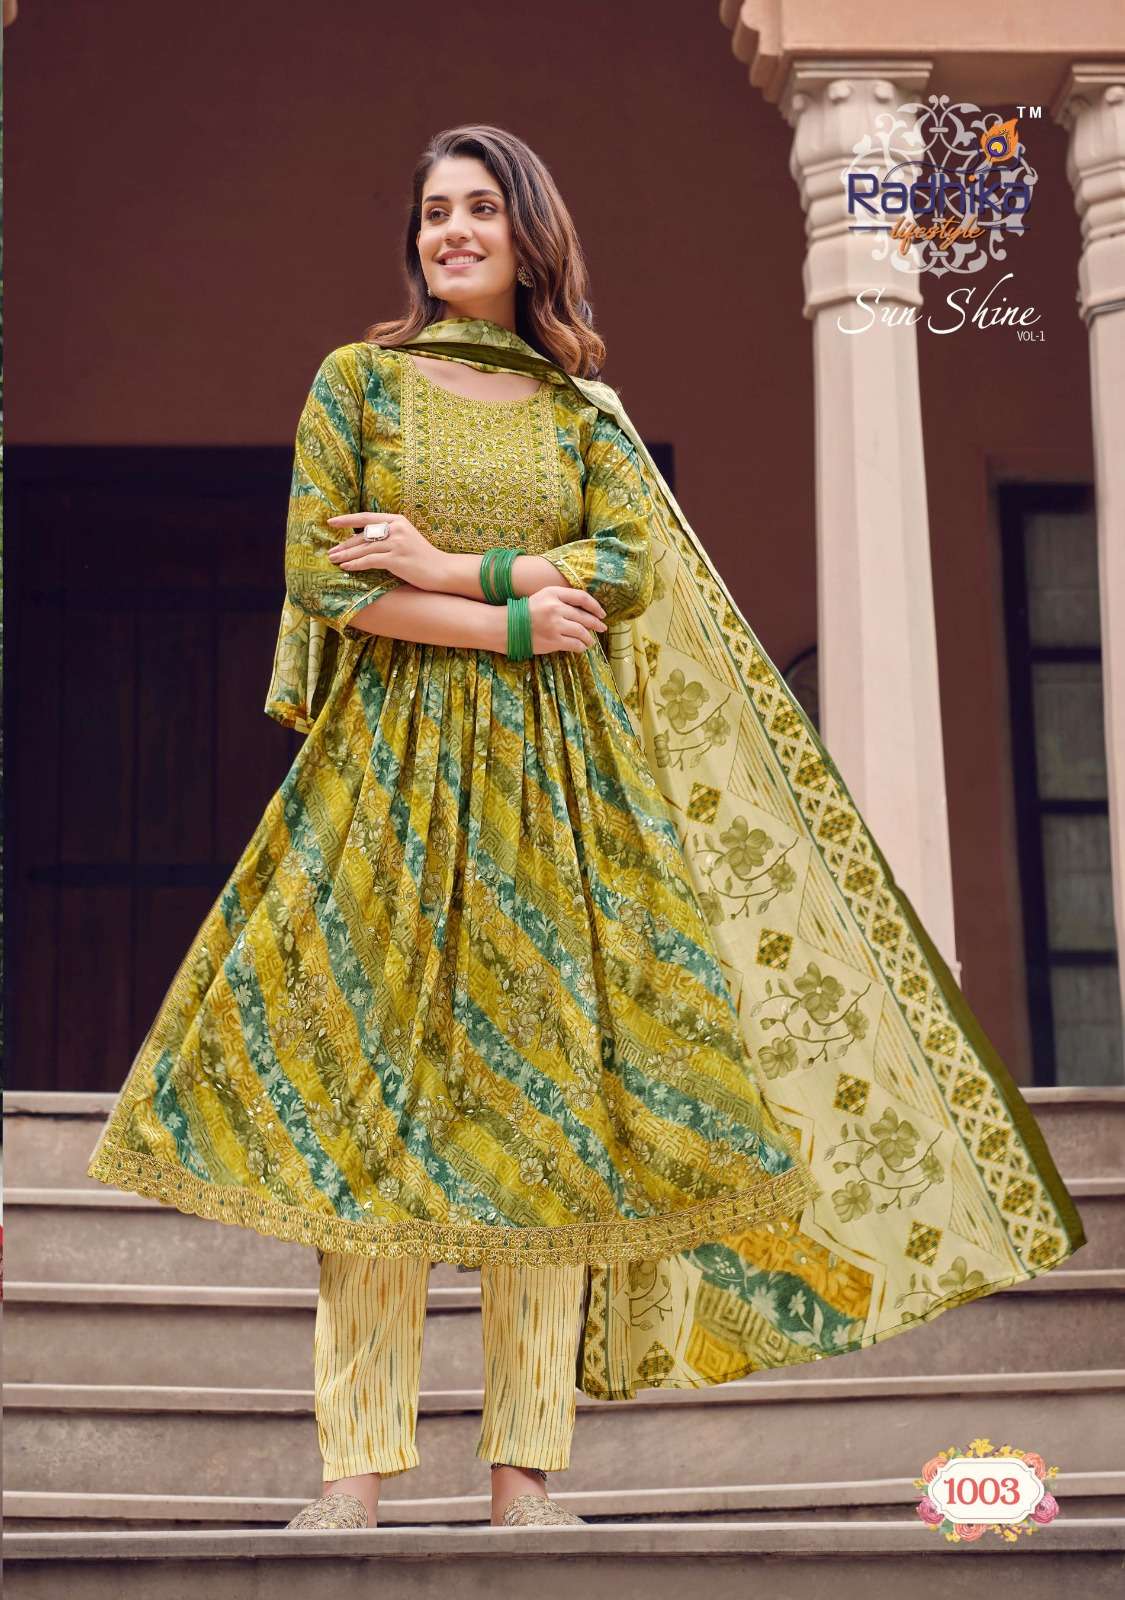 Sunshine Vol 1 Buy Radhika Style Online Wholesaler Latest Collection Kurta Suit Set